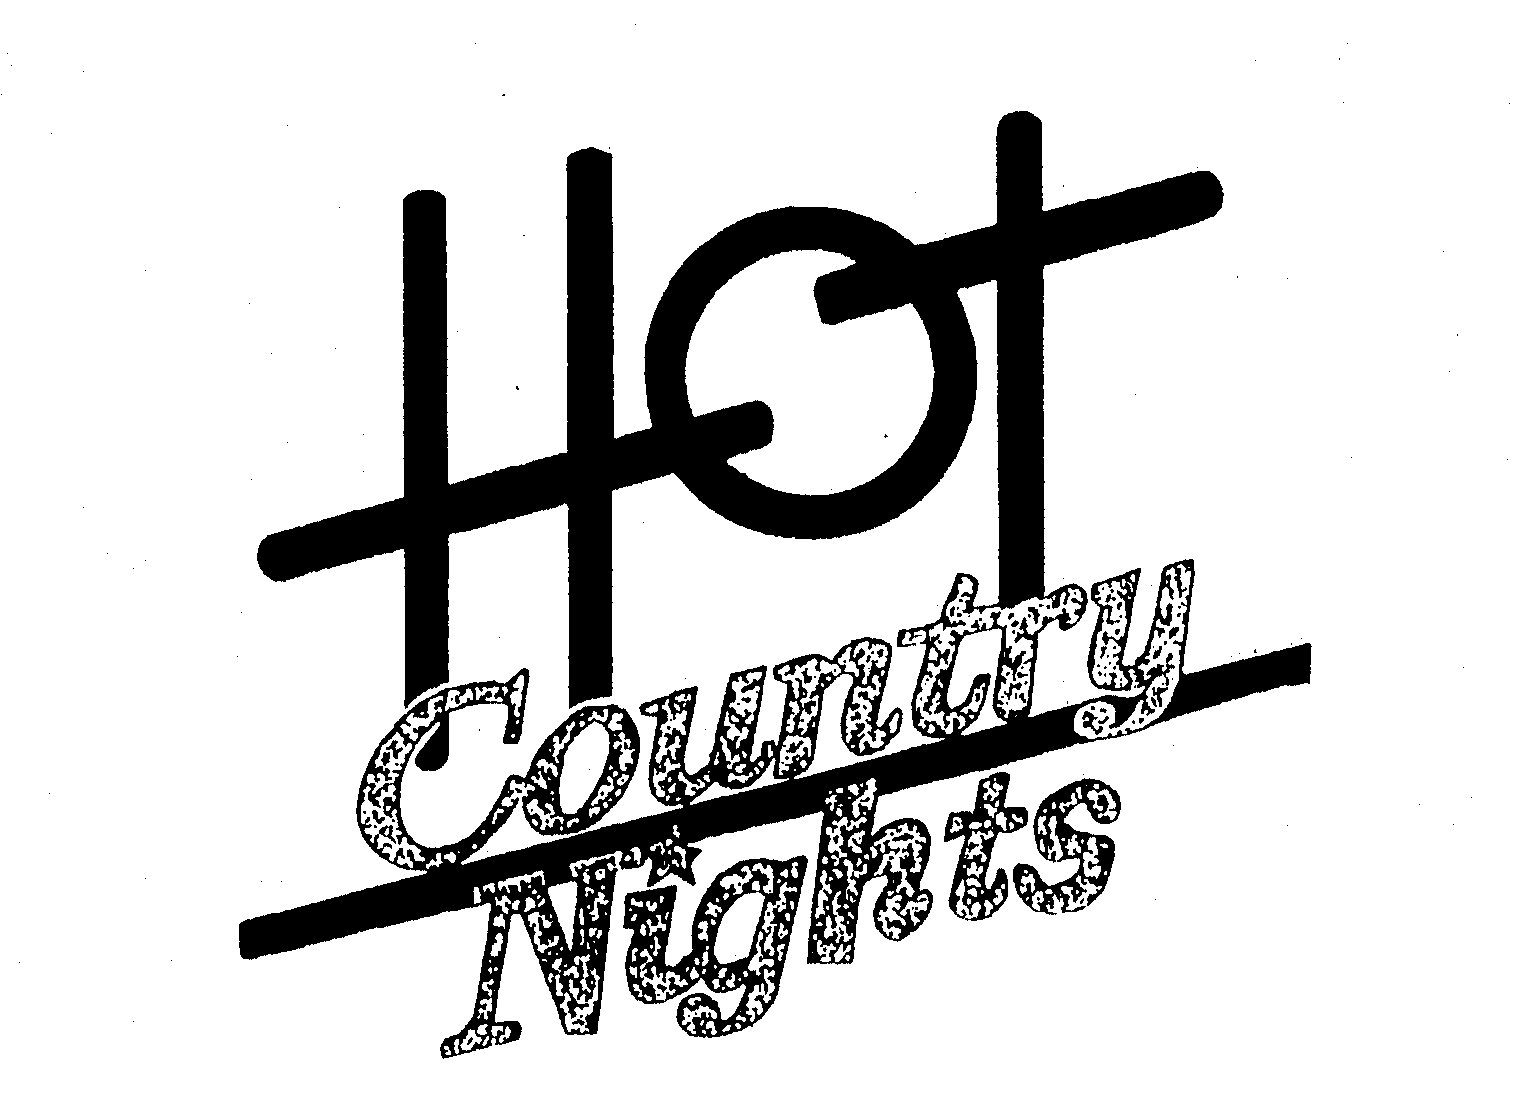 Trademark Logo HOT COUNTRY NIGHTS